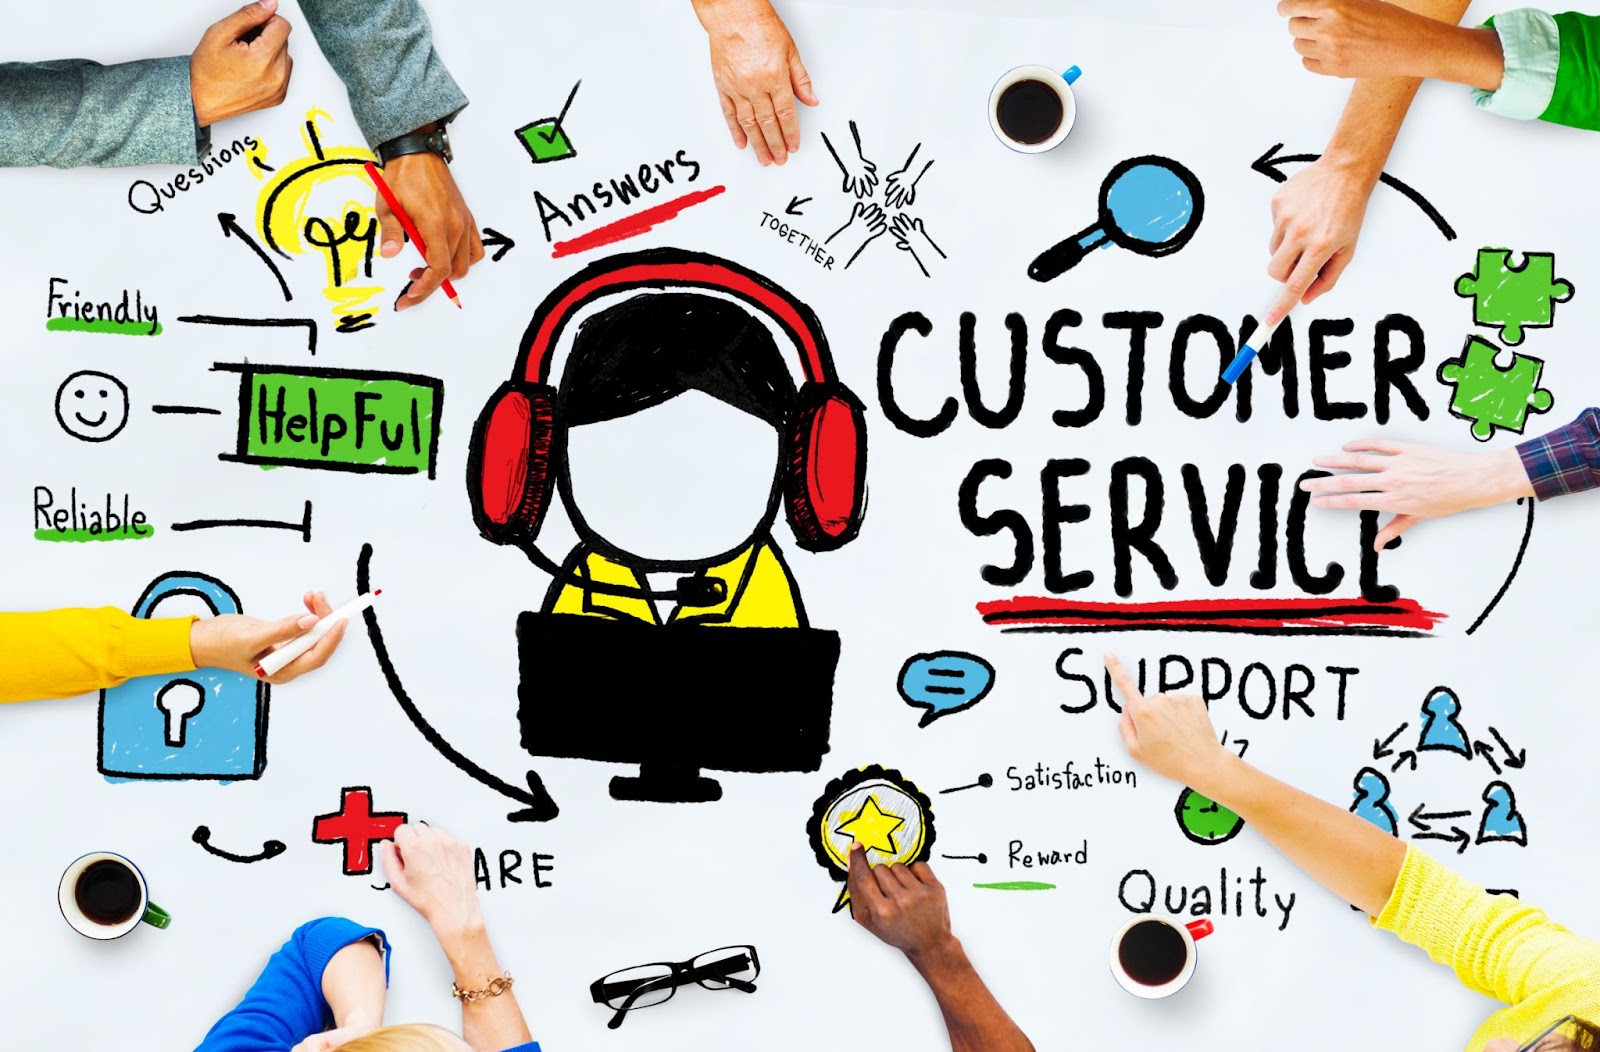 customer care executive experience resume